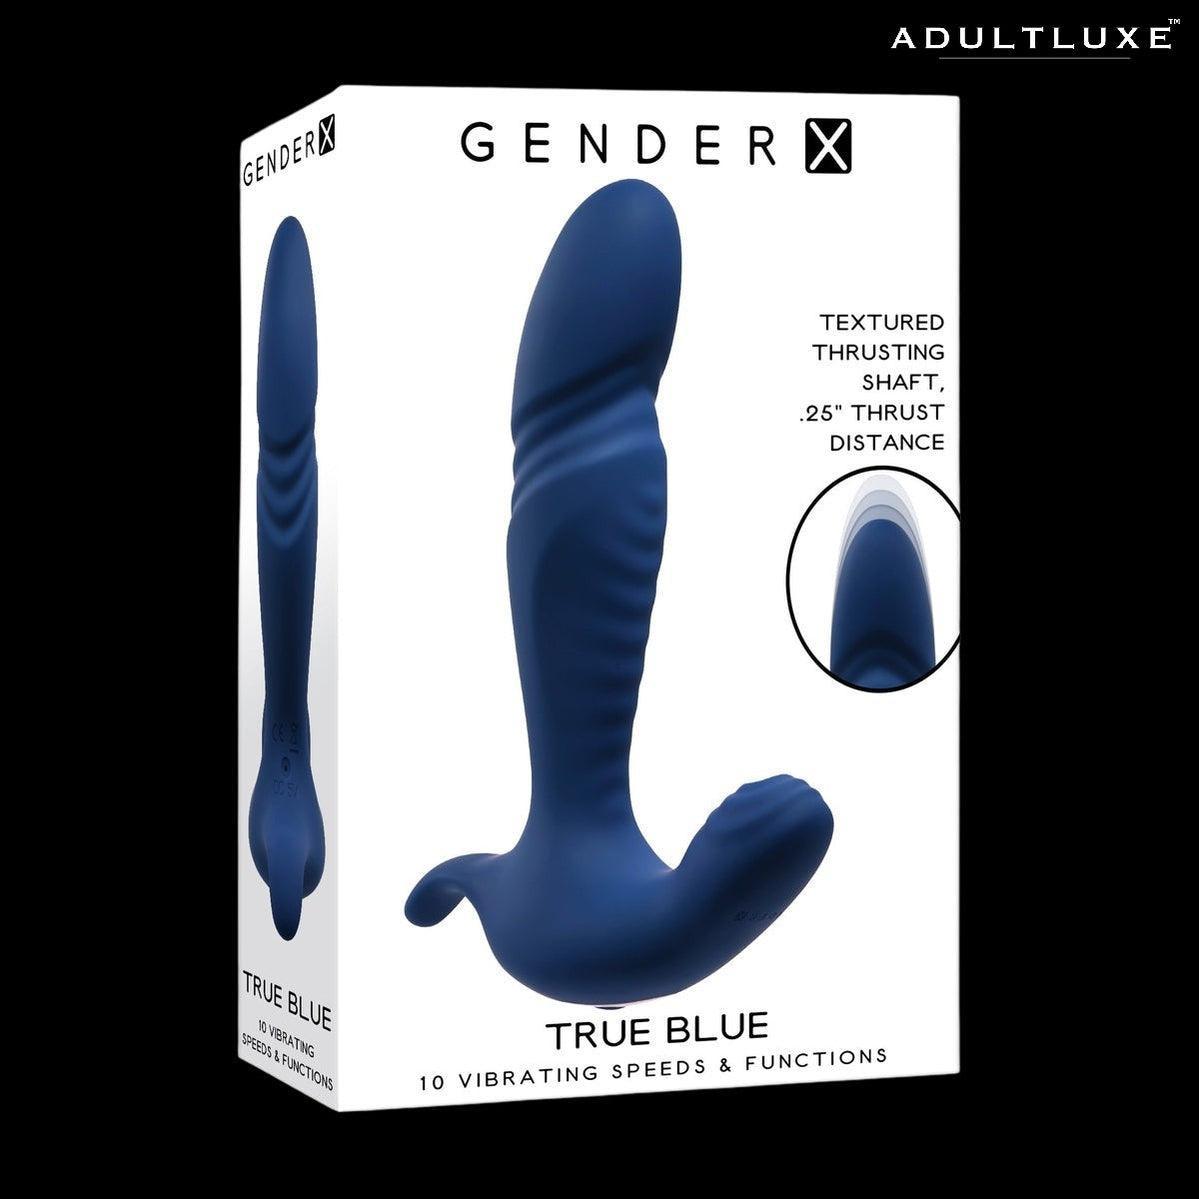 Gender X True Blue Thrusting Prostate Stimulator